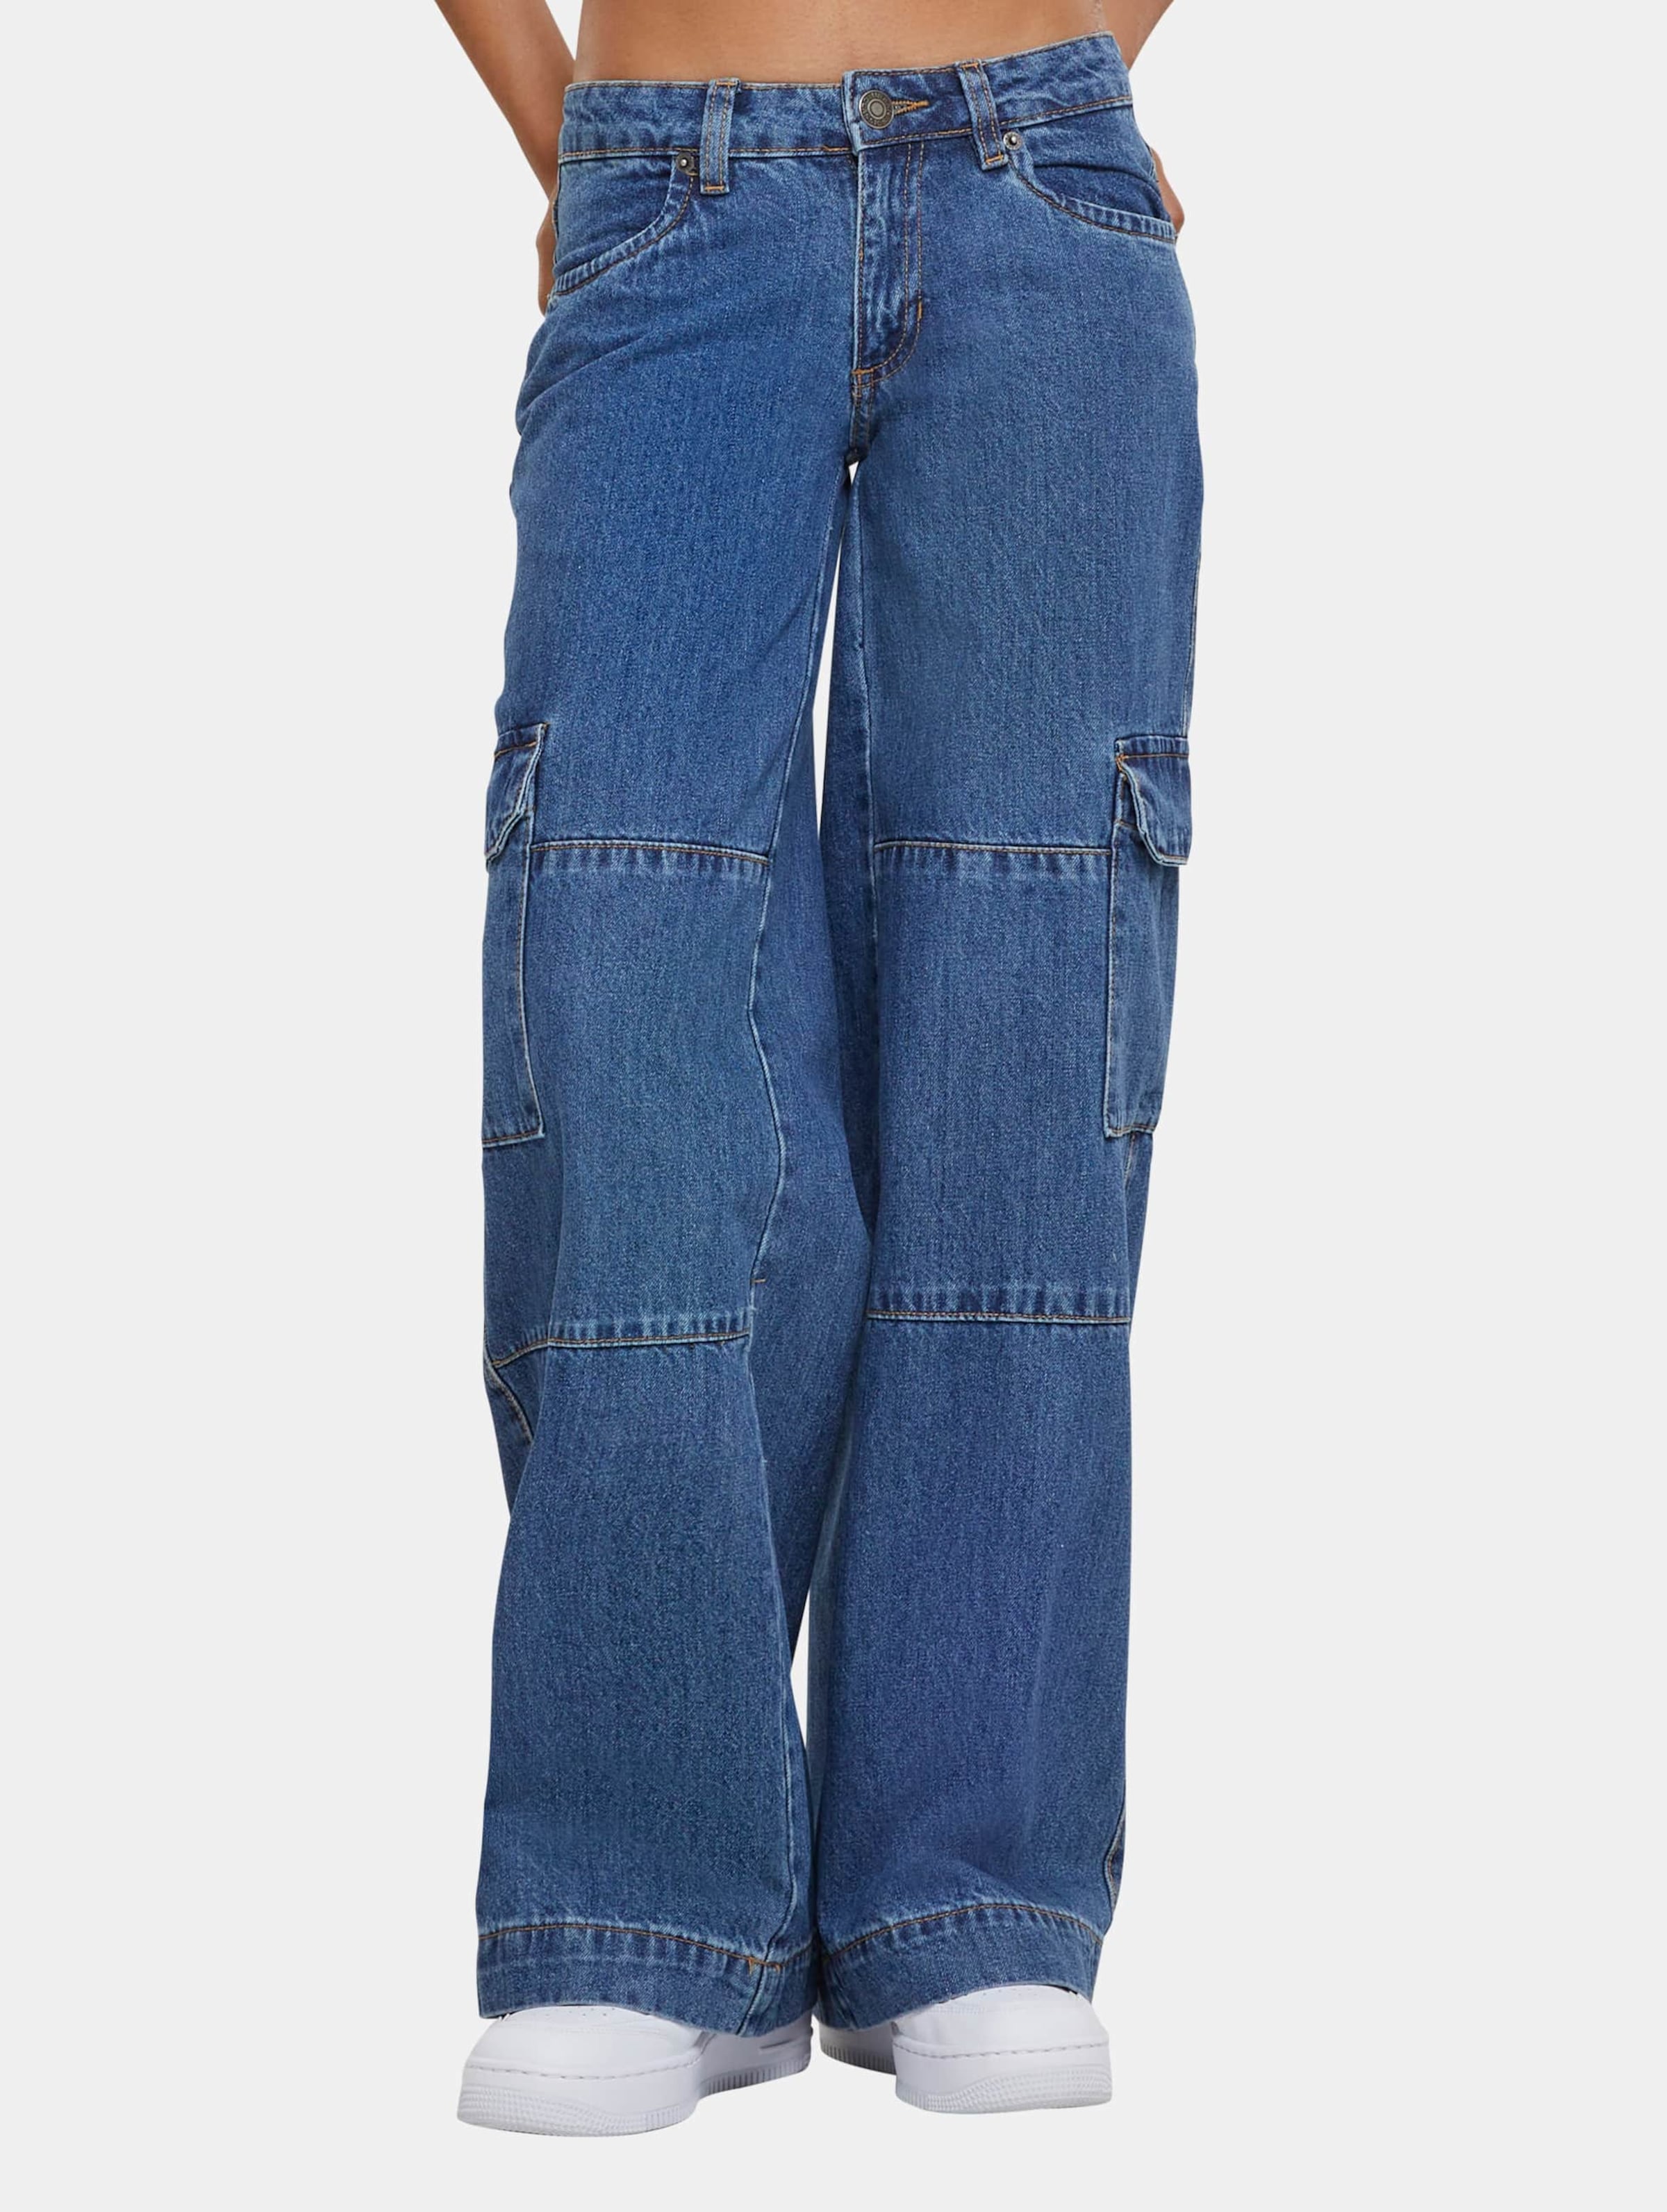 Urban Classics - Low Waist Denim Cargo trousers - Taille, 36 inch - Donkerblauw